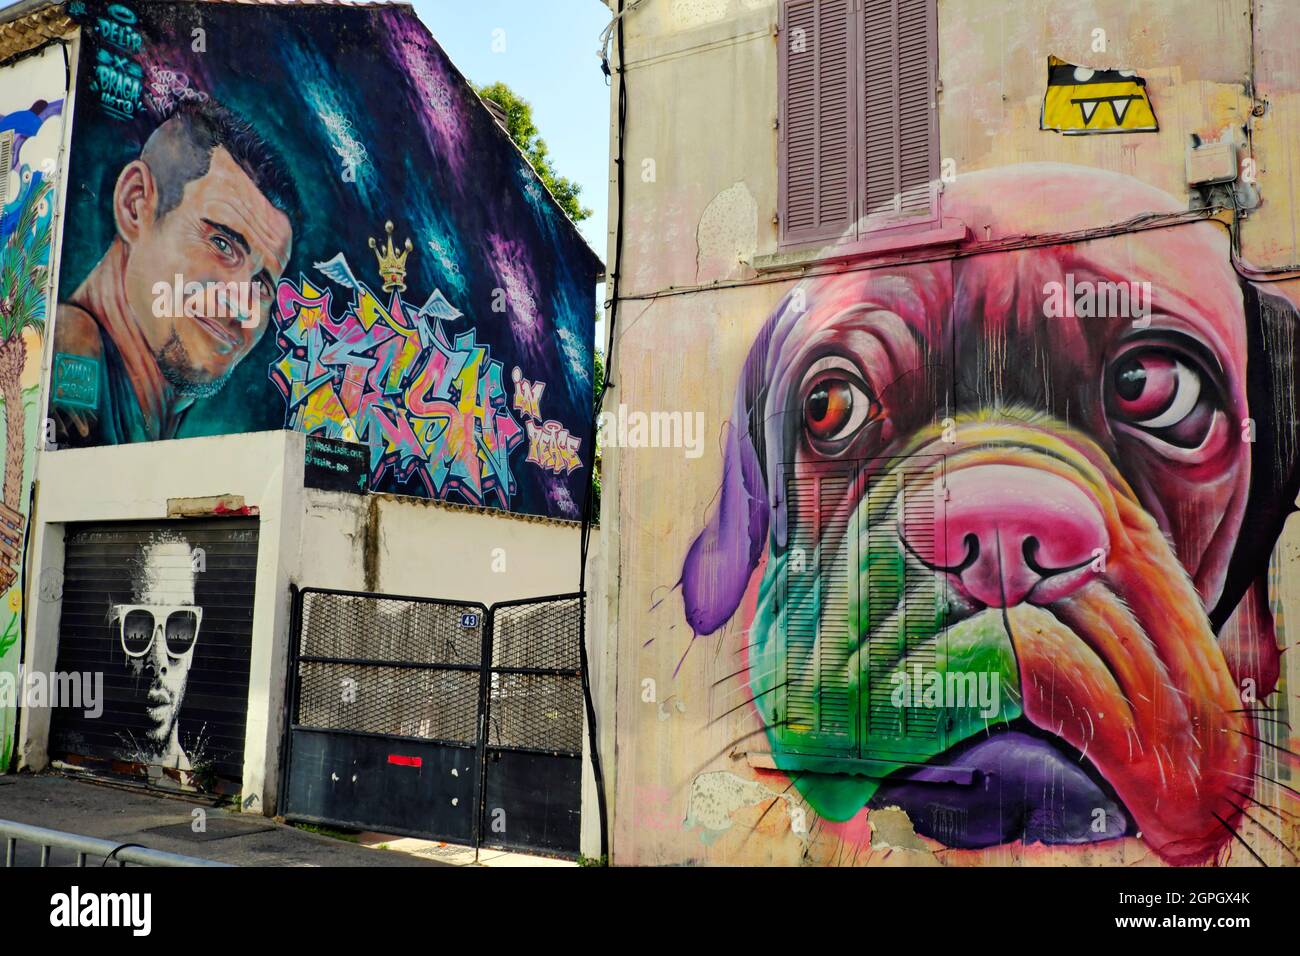 France, Var, La Seyne sur Mer, Impasse Verlaque, street art, facades, dog by graffiti artist Dopie, frescoes by Supo Caos and Seaty Stock Photo